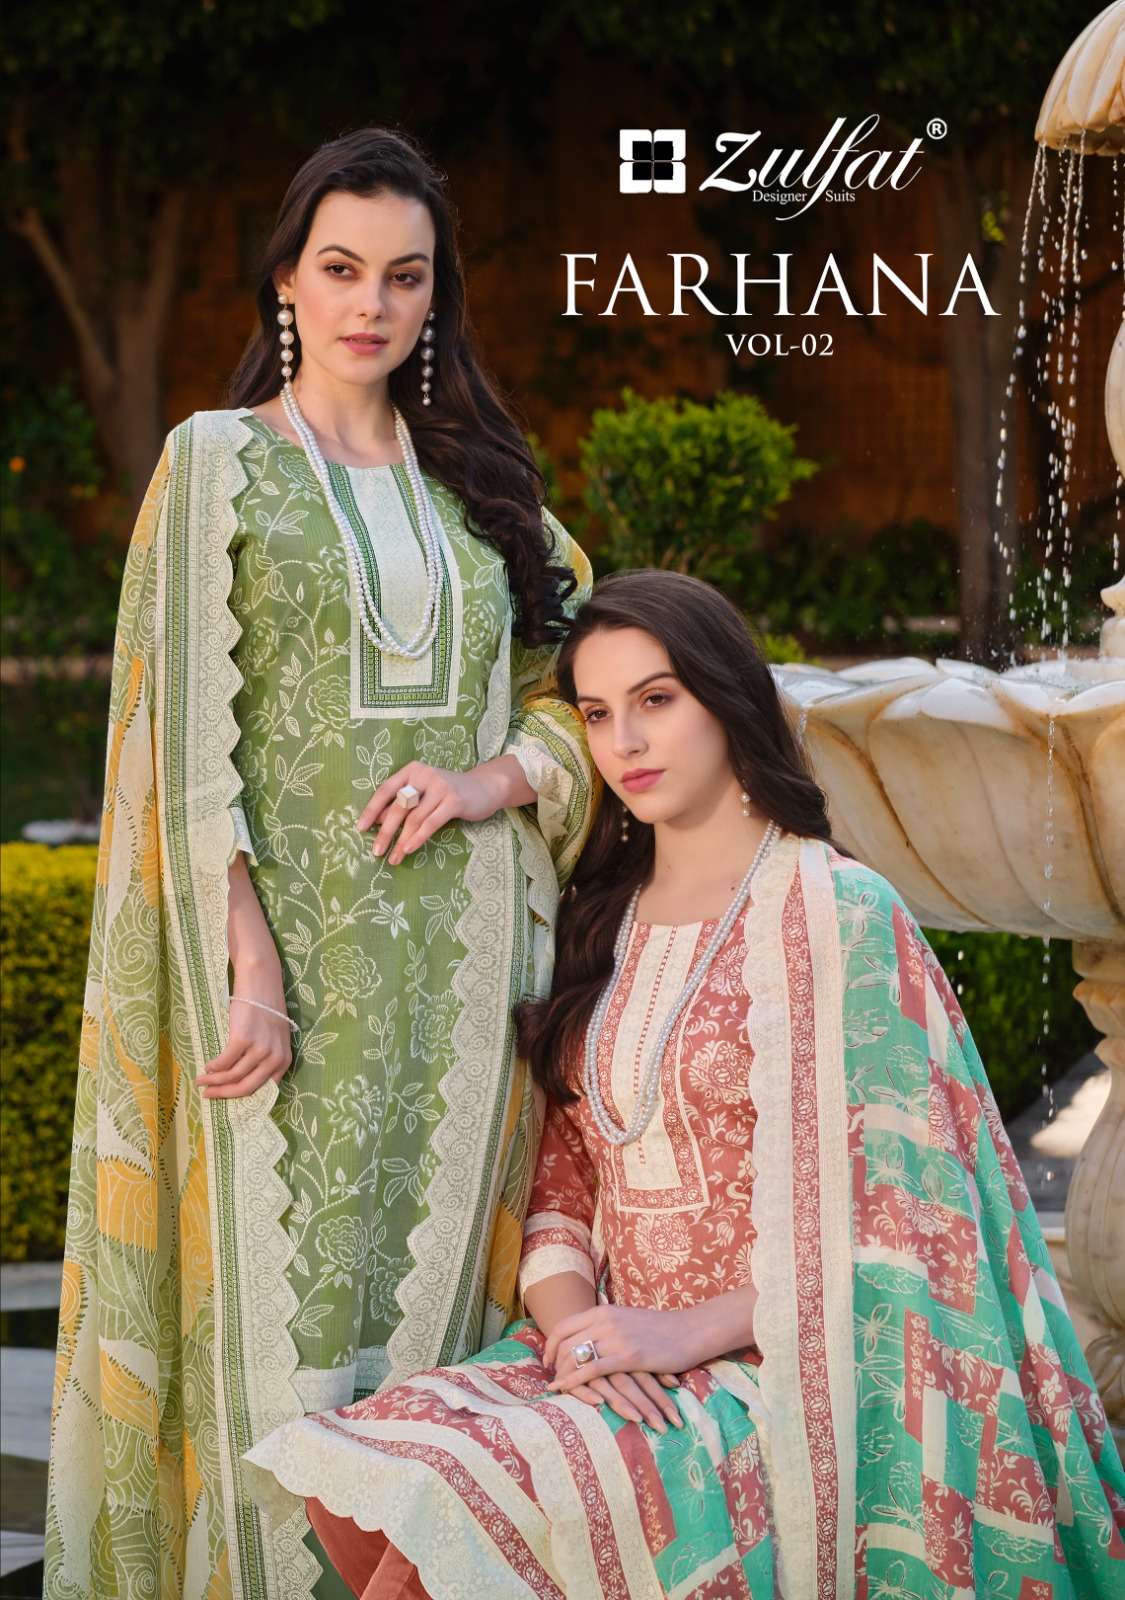 Zulfat Farhana Vol 2 Ladies Wear Fancy Cotton Dress Material New Designs